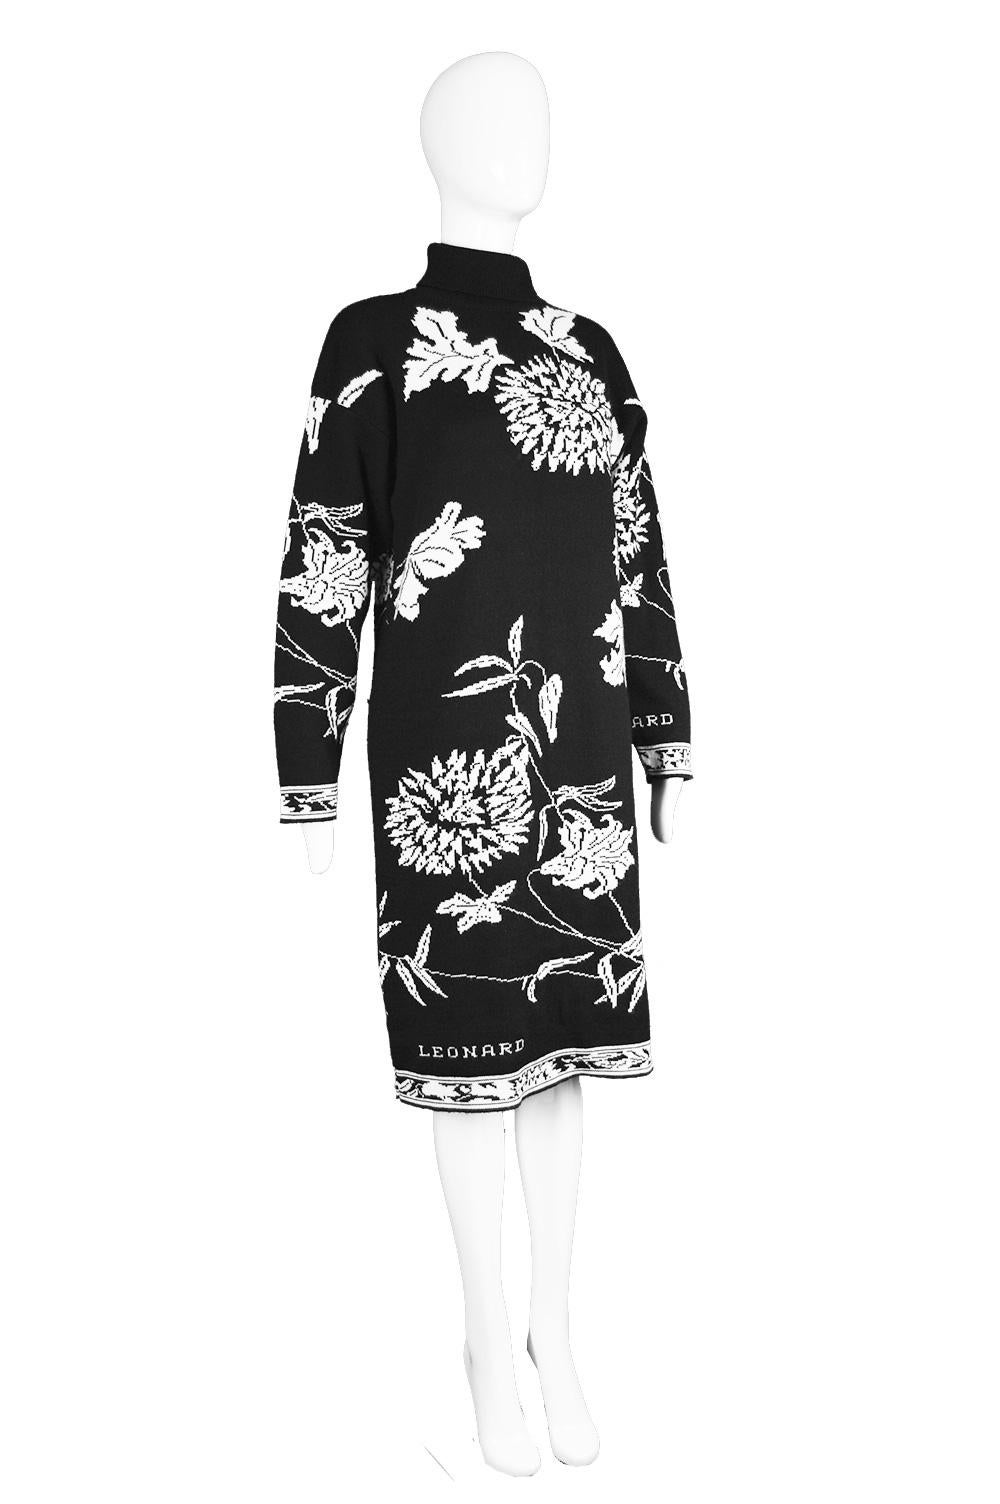 Leonard Paris Black & White Vintage Wool Blend Knit Sweater Dress, 1980s 1